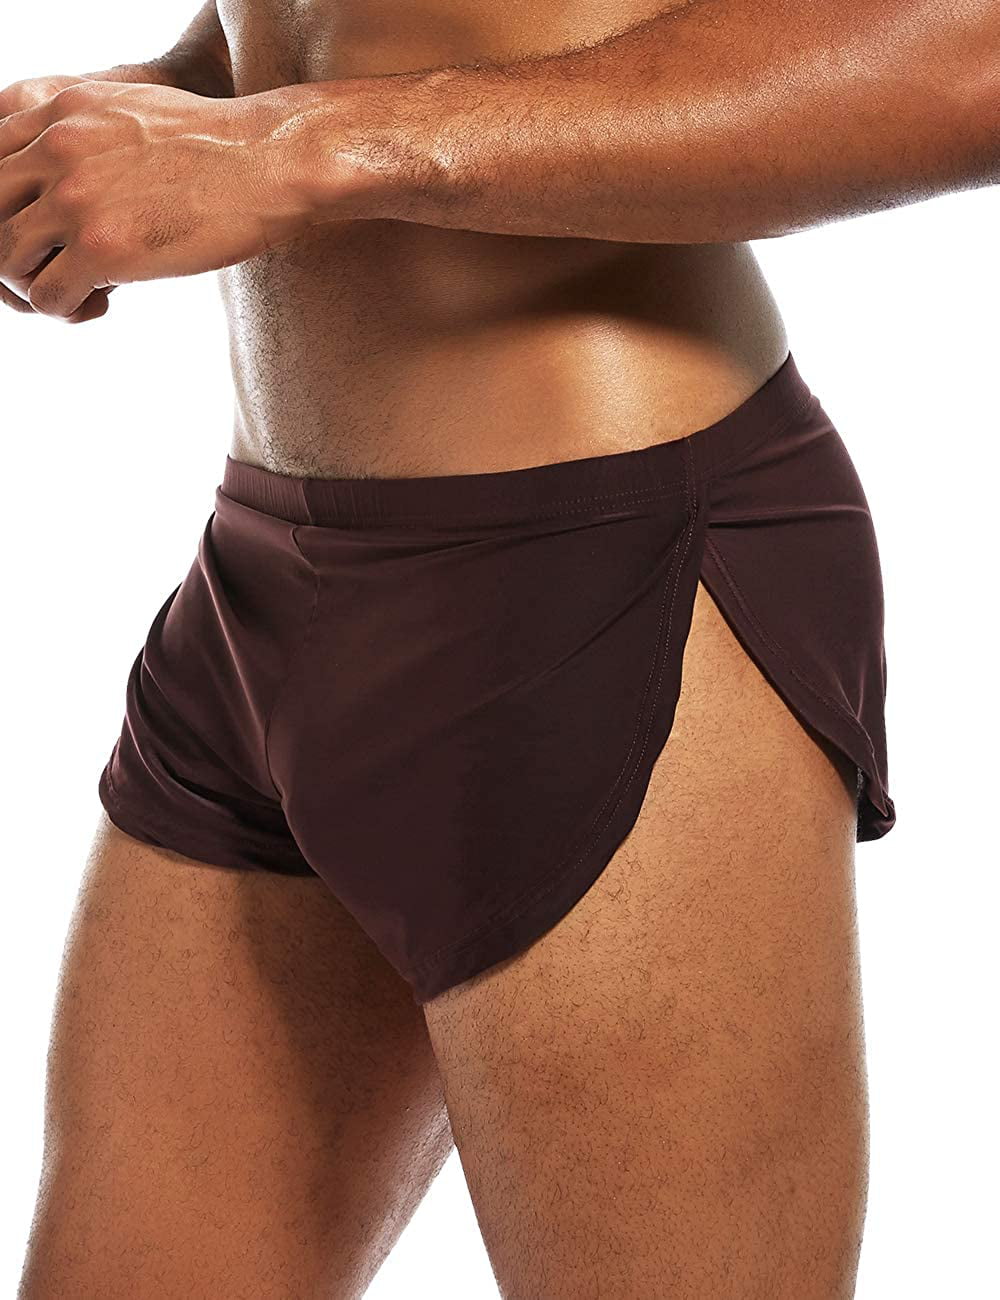 Buy MIZOK Men's Workout Yoga Short Sexy Breathable Underwear Split Side  Boxer Shorts White XL at